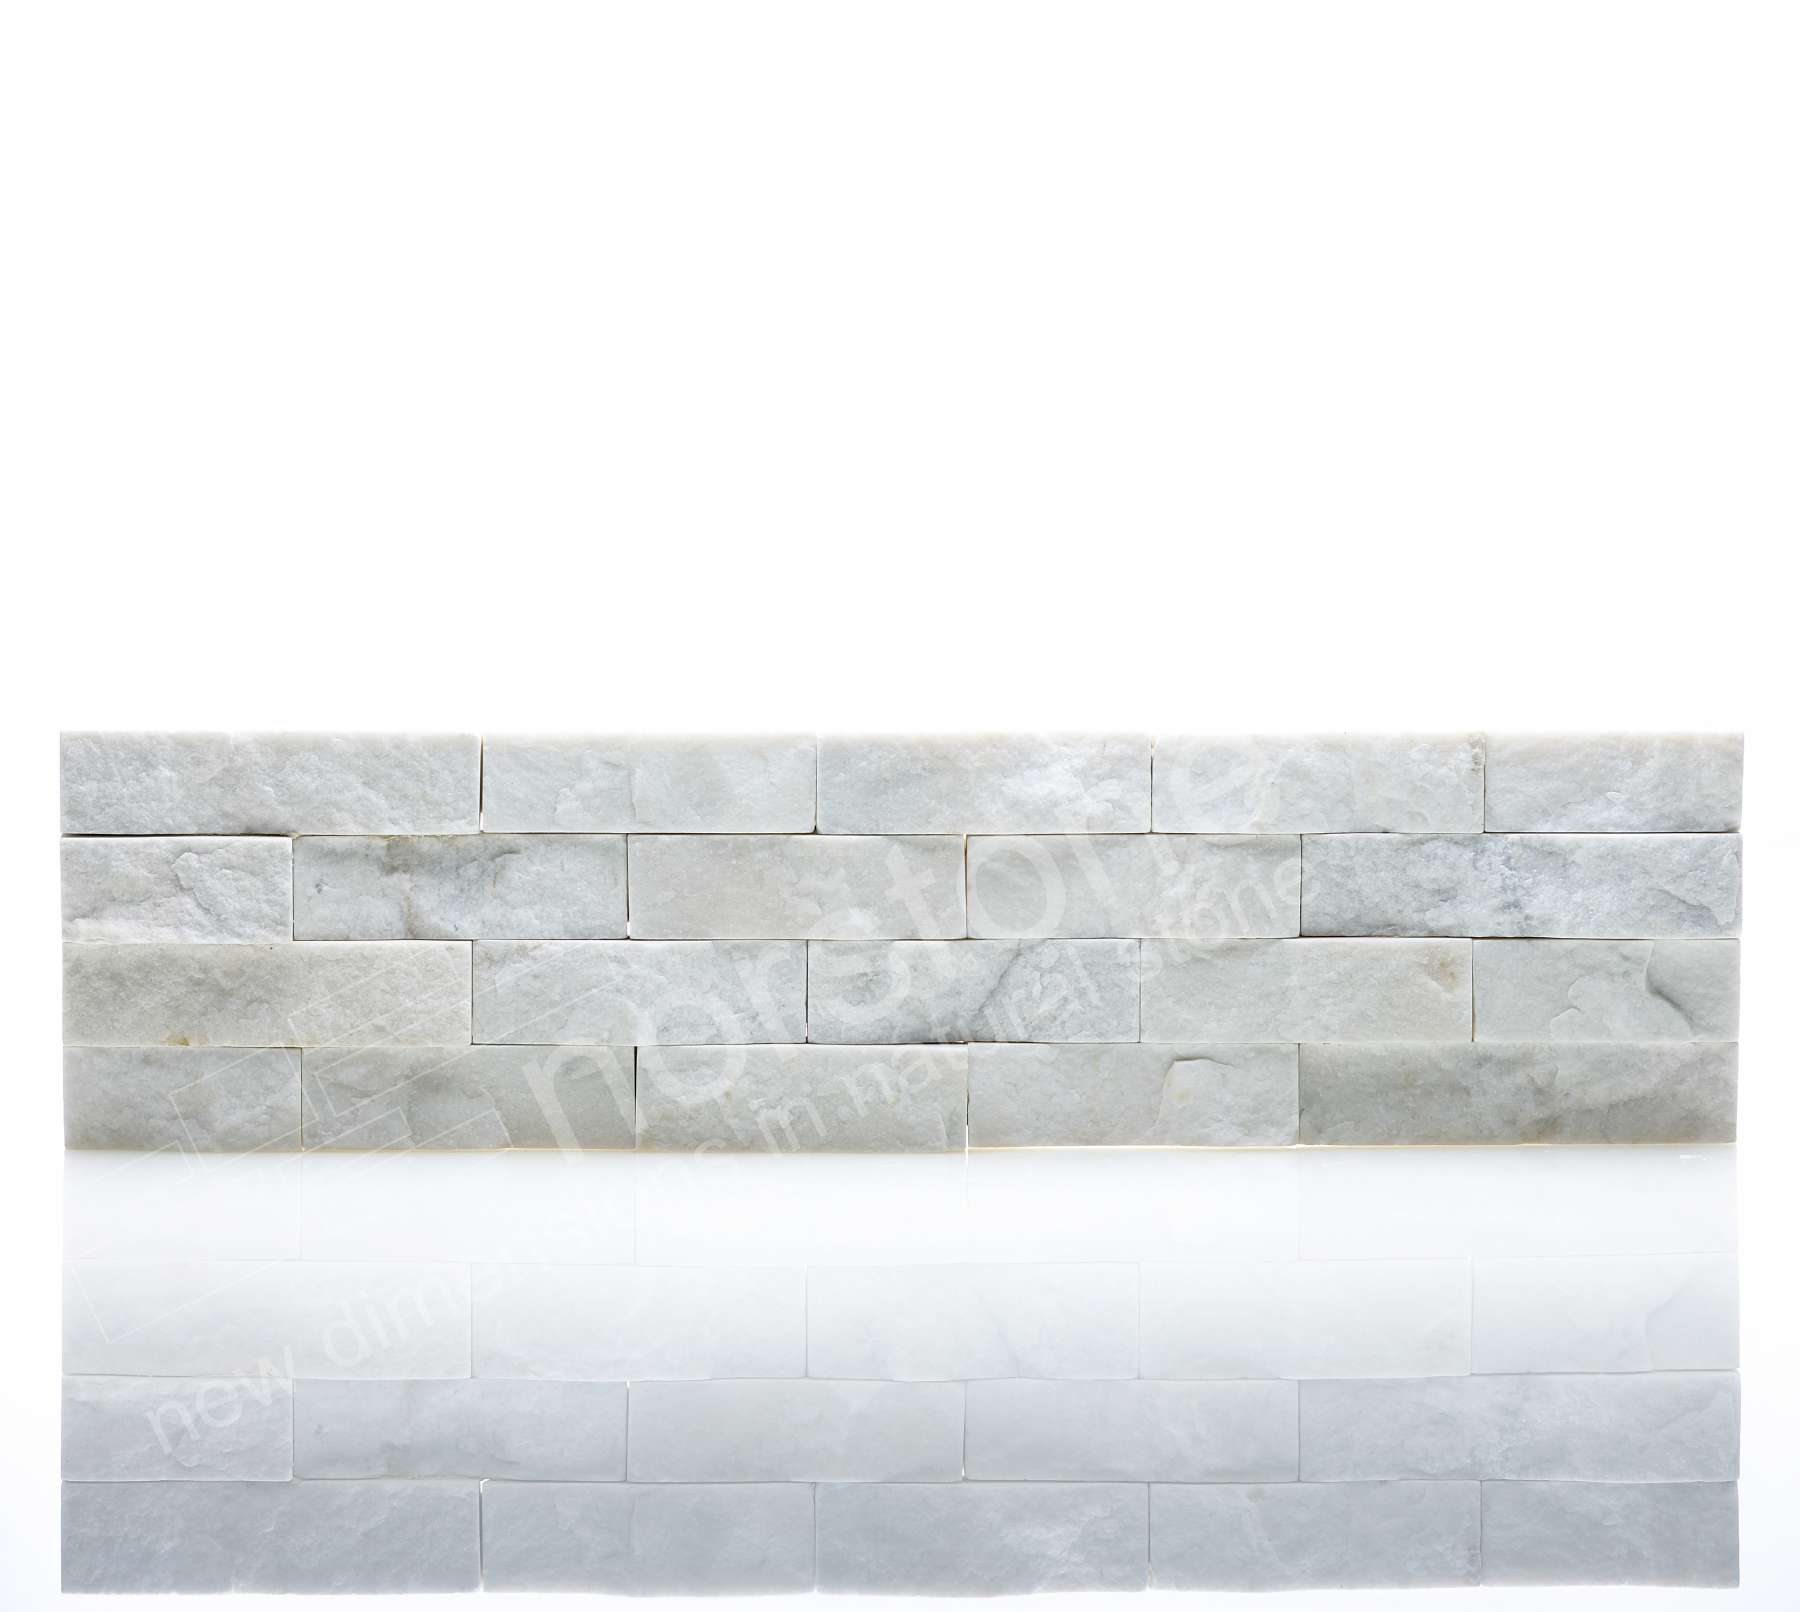 Norstone White Rock Panel stone veneer panel system